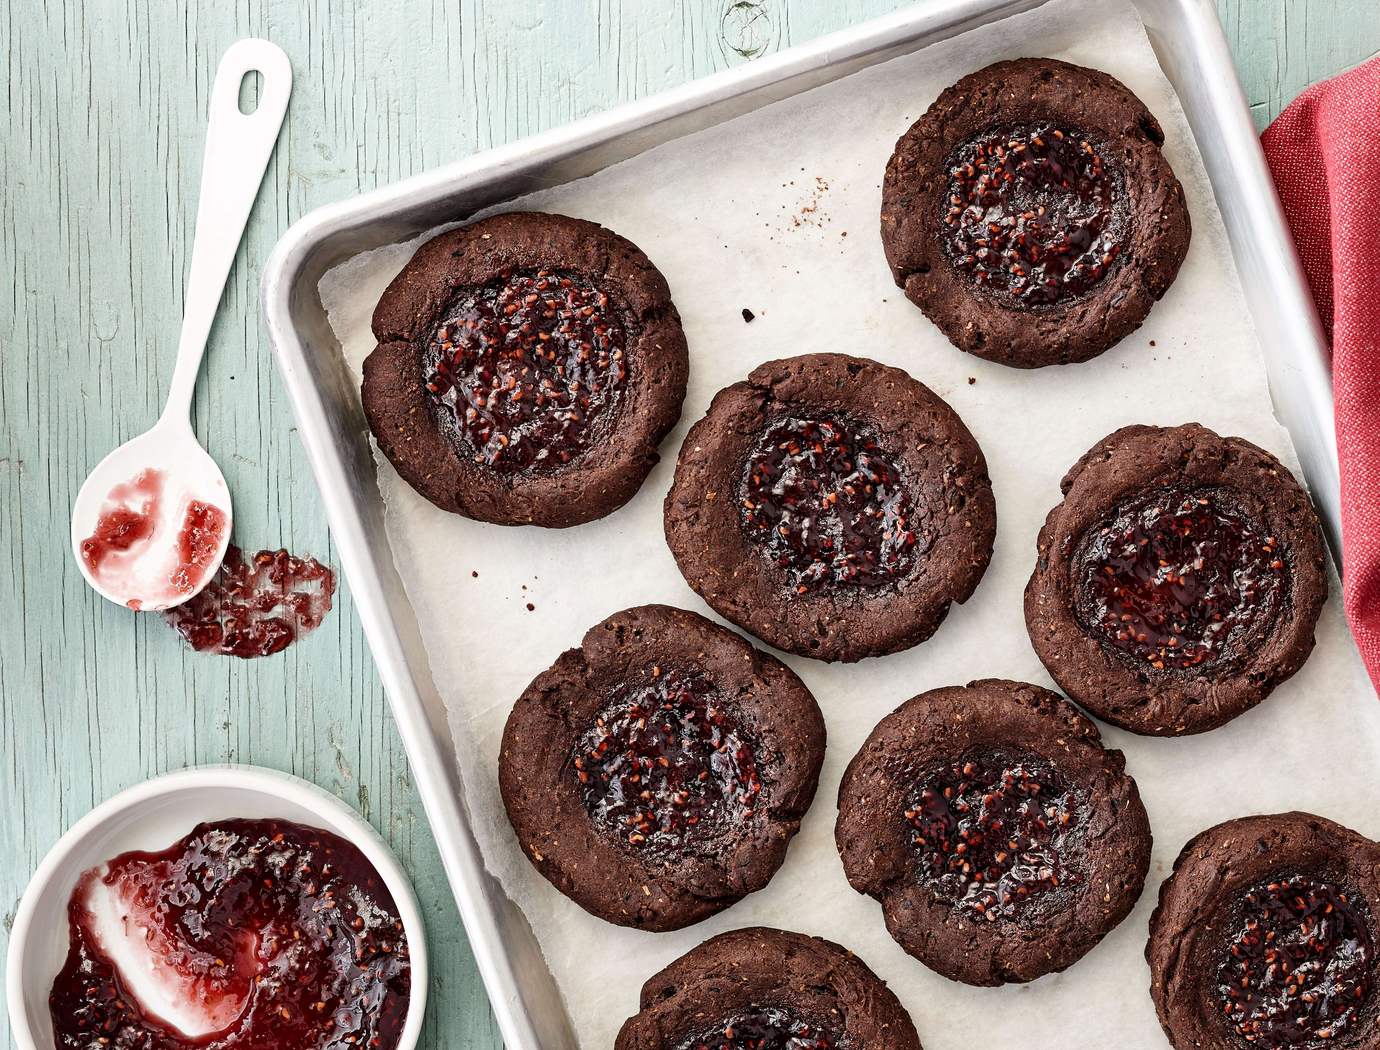 Chocolate and raspberry jam cookies